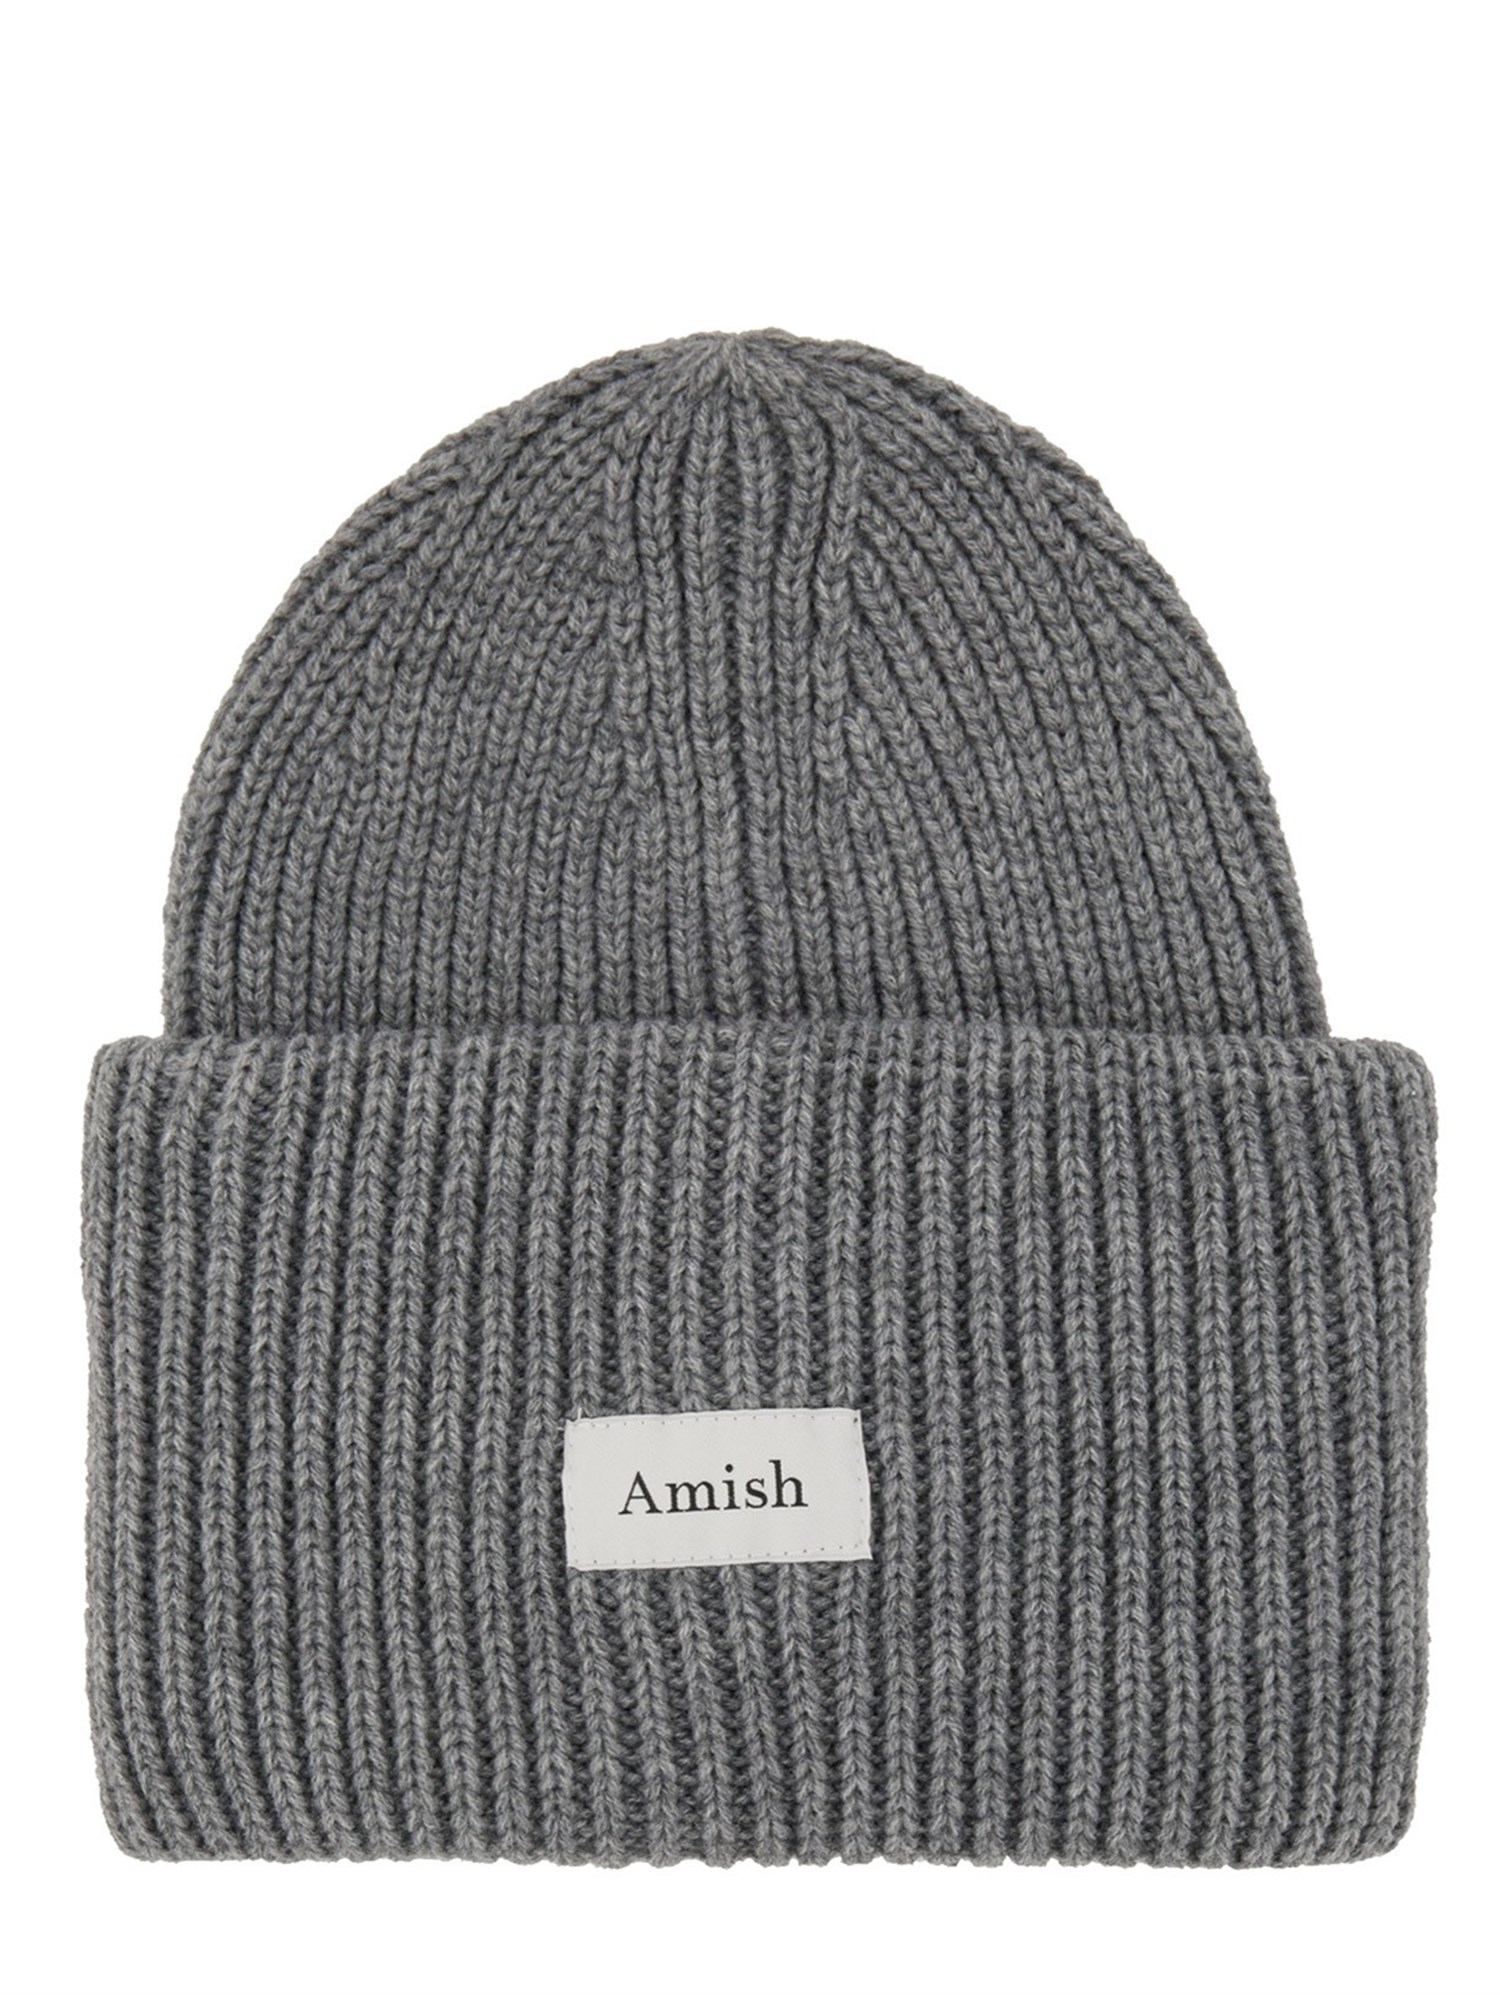 Amish amish beanie hat with logo